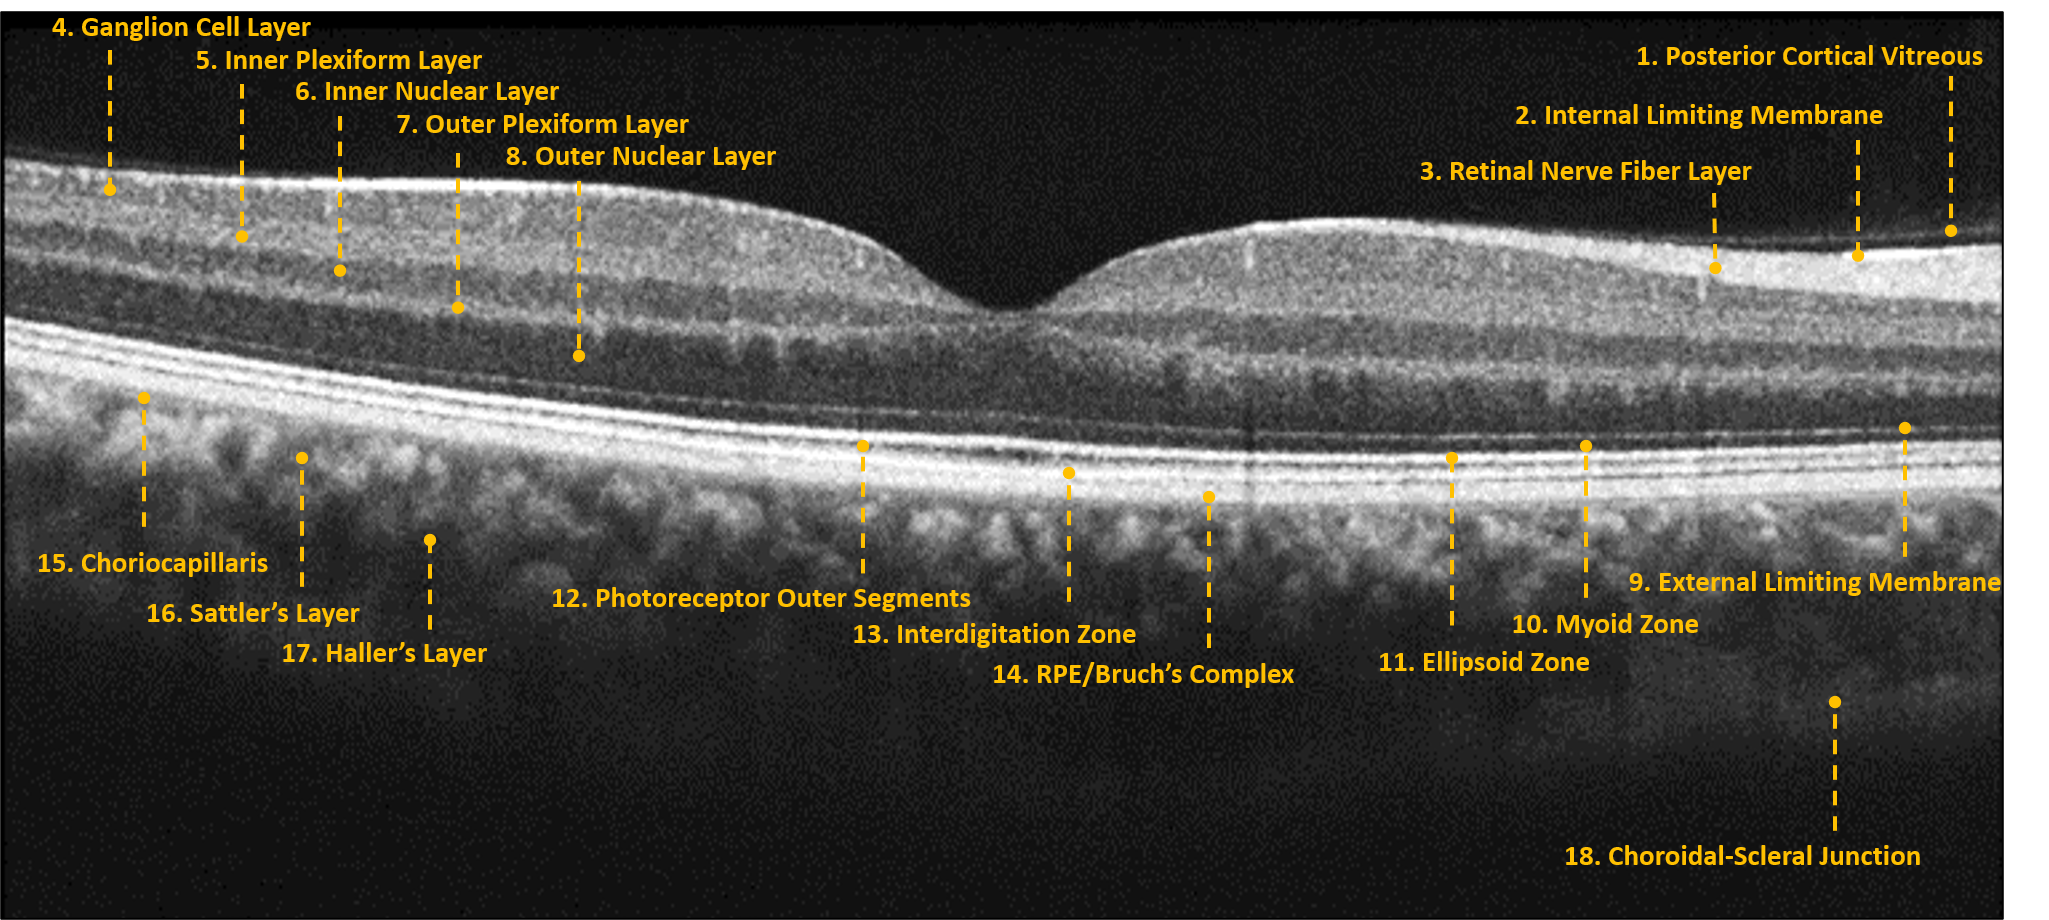 normal macular OCT B-scan